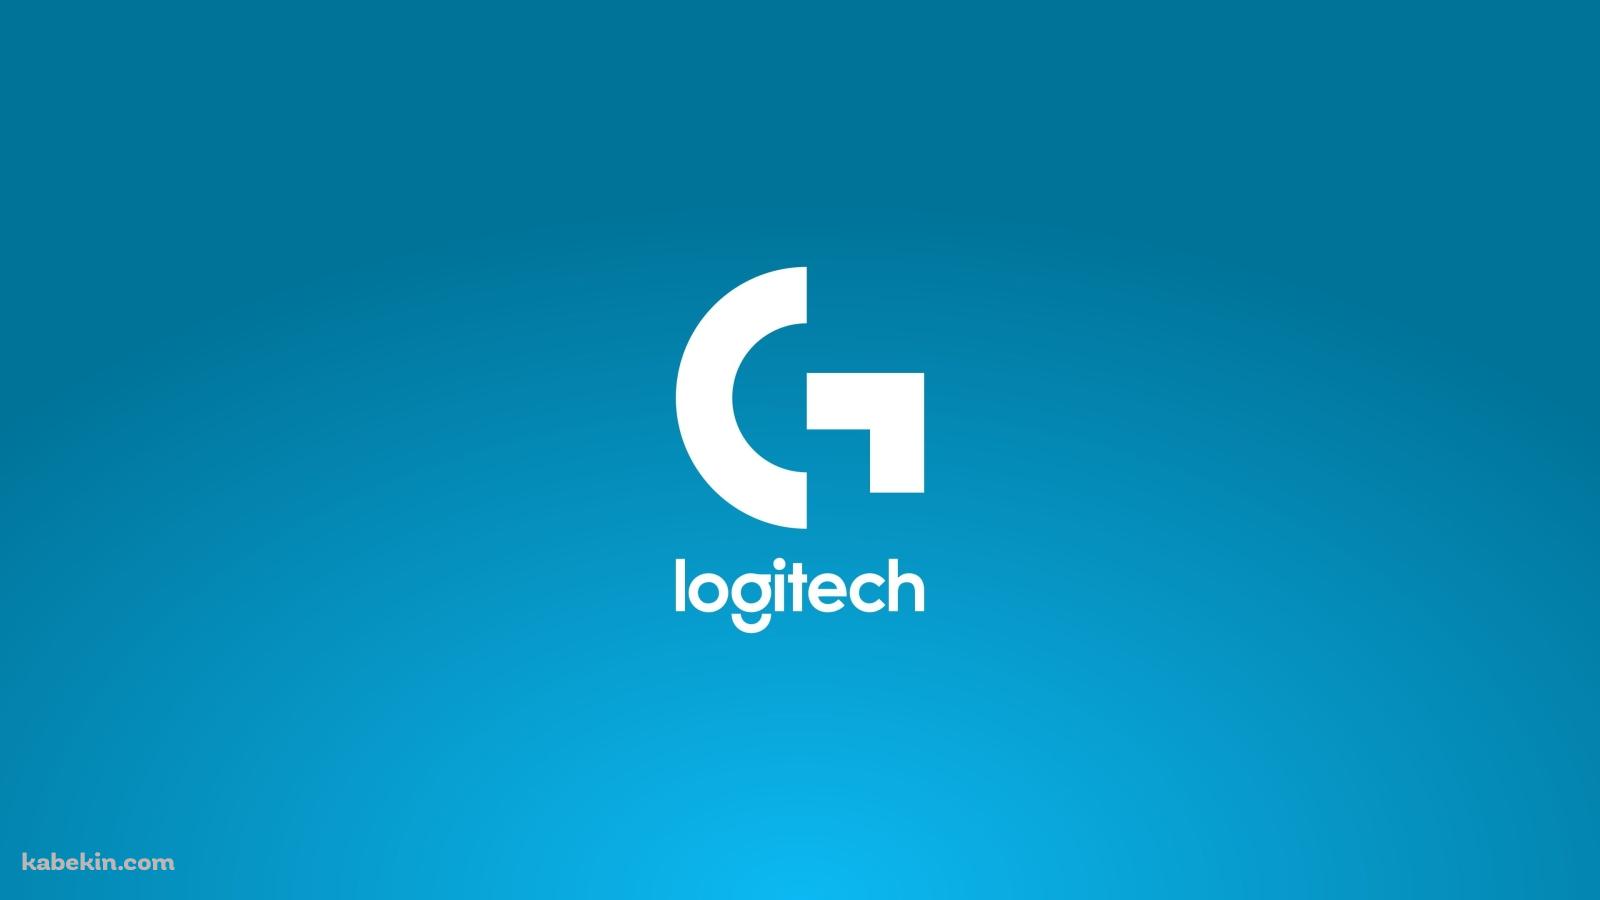 Logiteck logo / ロジテック ロゴの壁紙(1600px x 900px) 高画質 PC・デスクトップ用